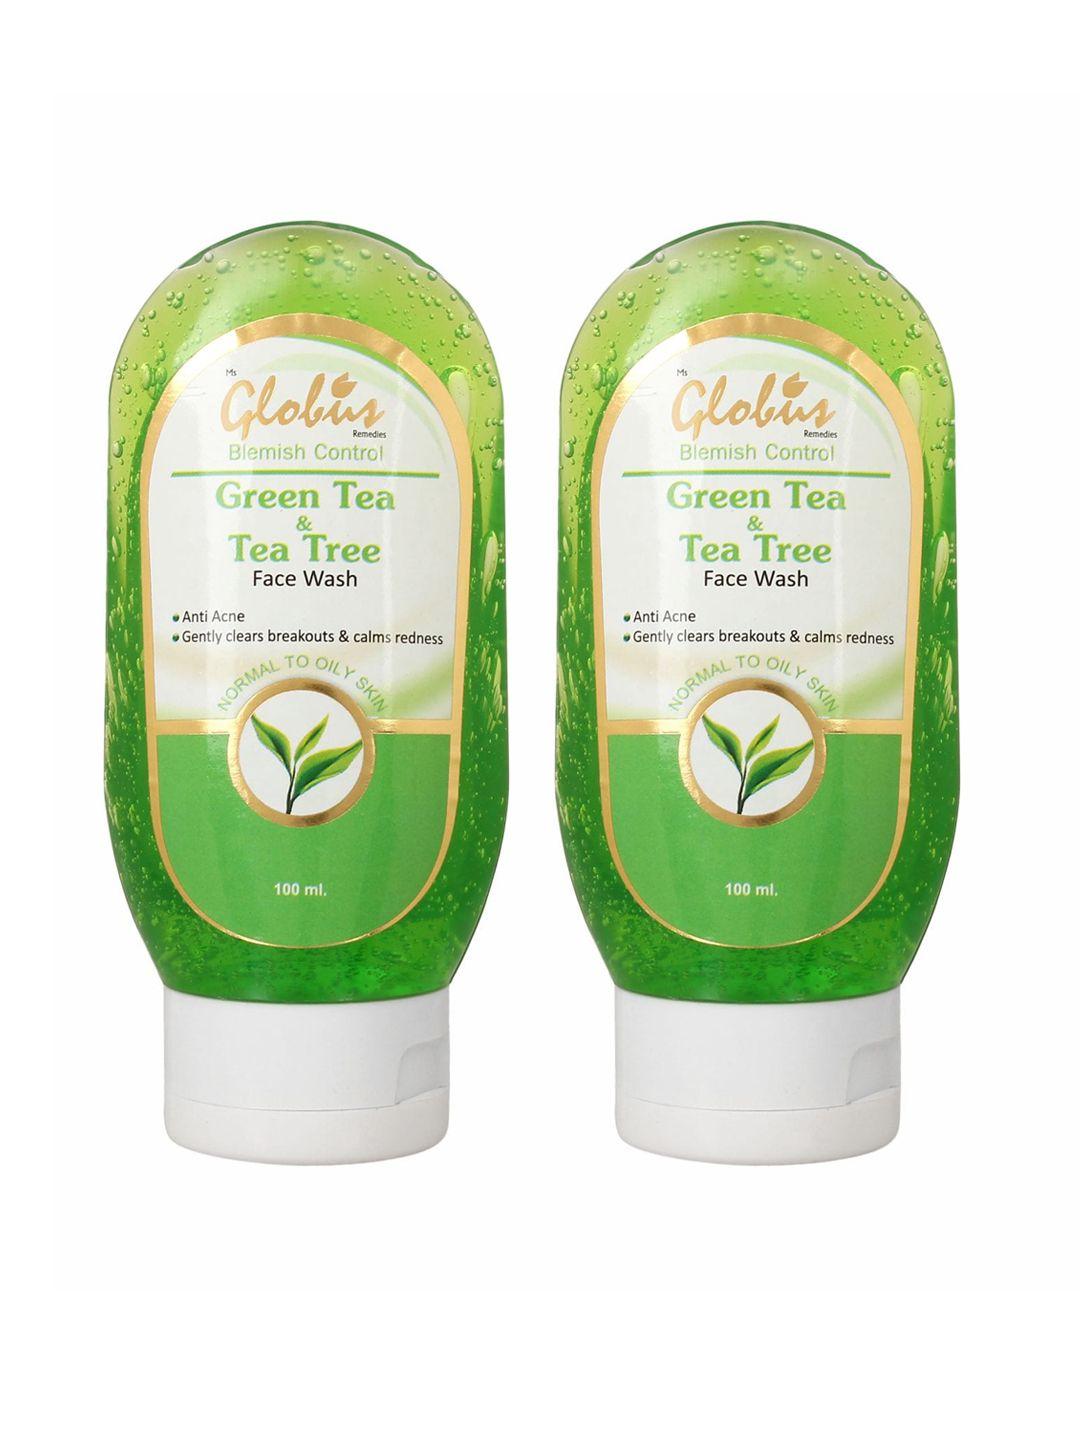 globus remedies set of 2 blemish control green tea & tea tree face wash - 100 ml each